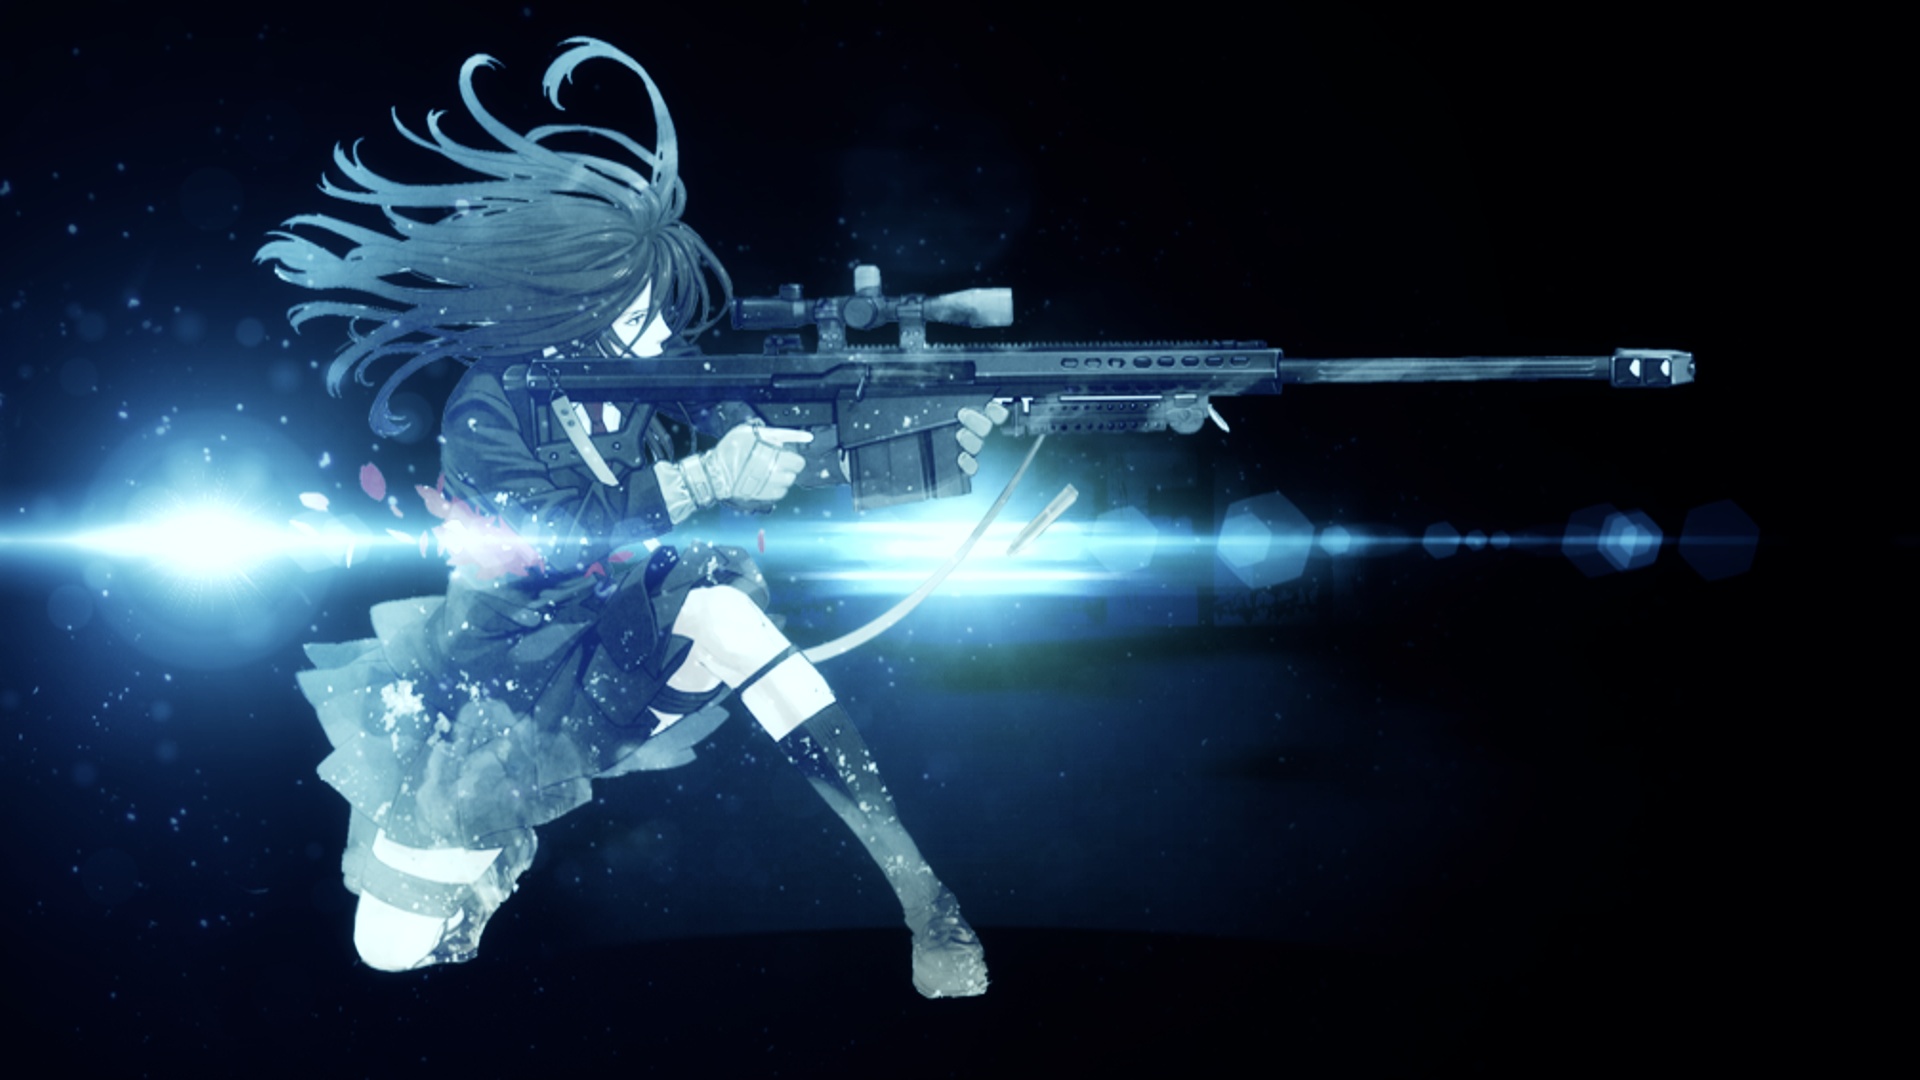 Sniper Girl - BattleFeild by xHimeAMV on DeviantArt